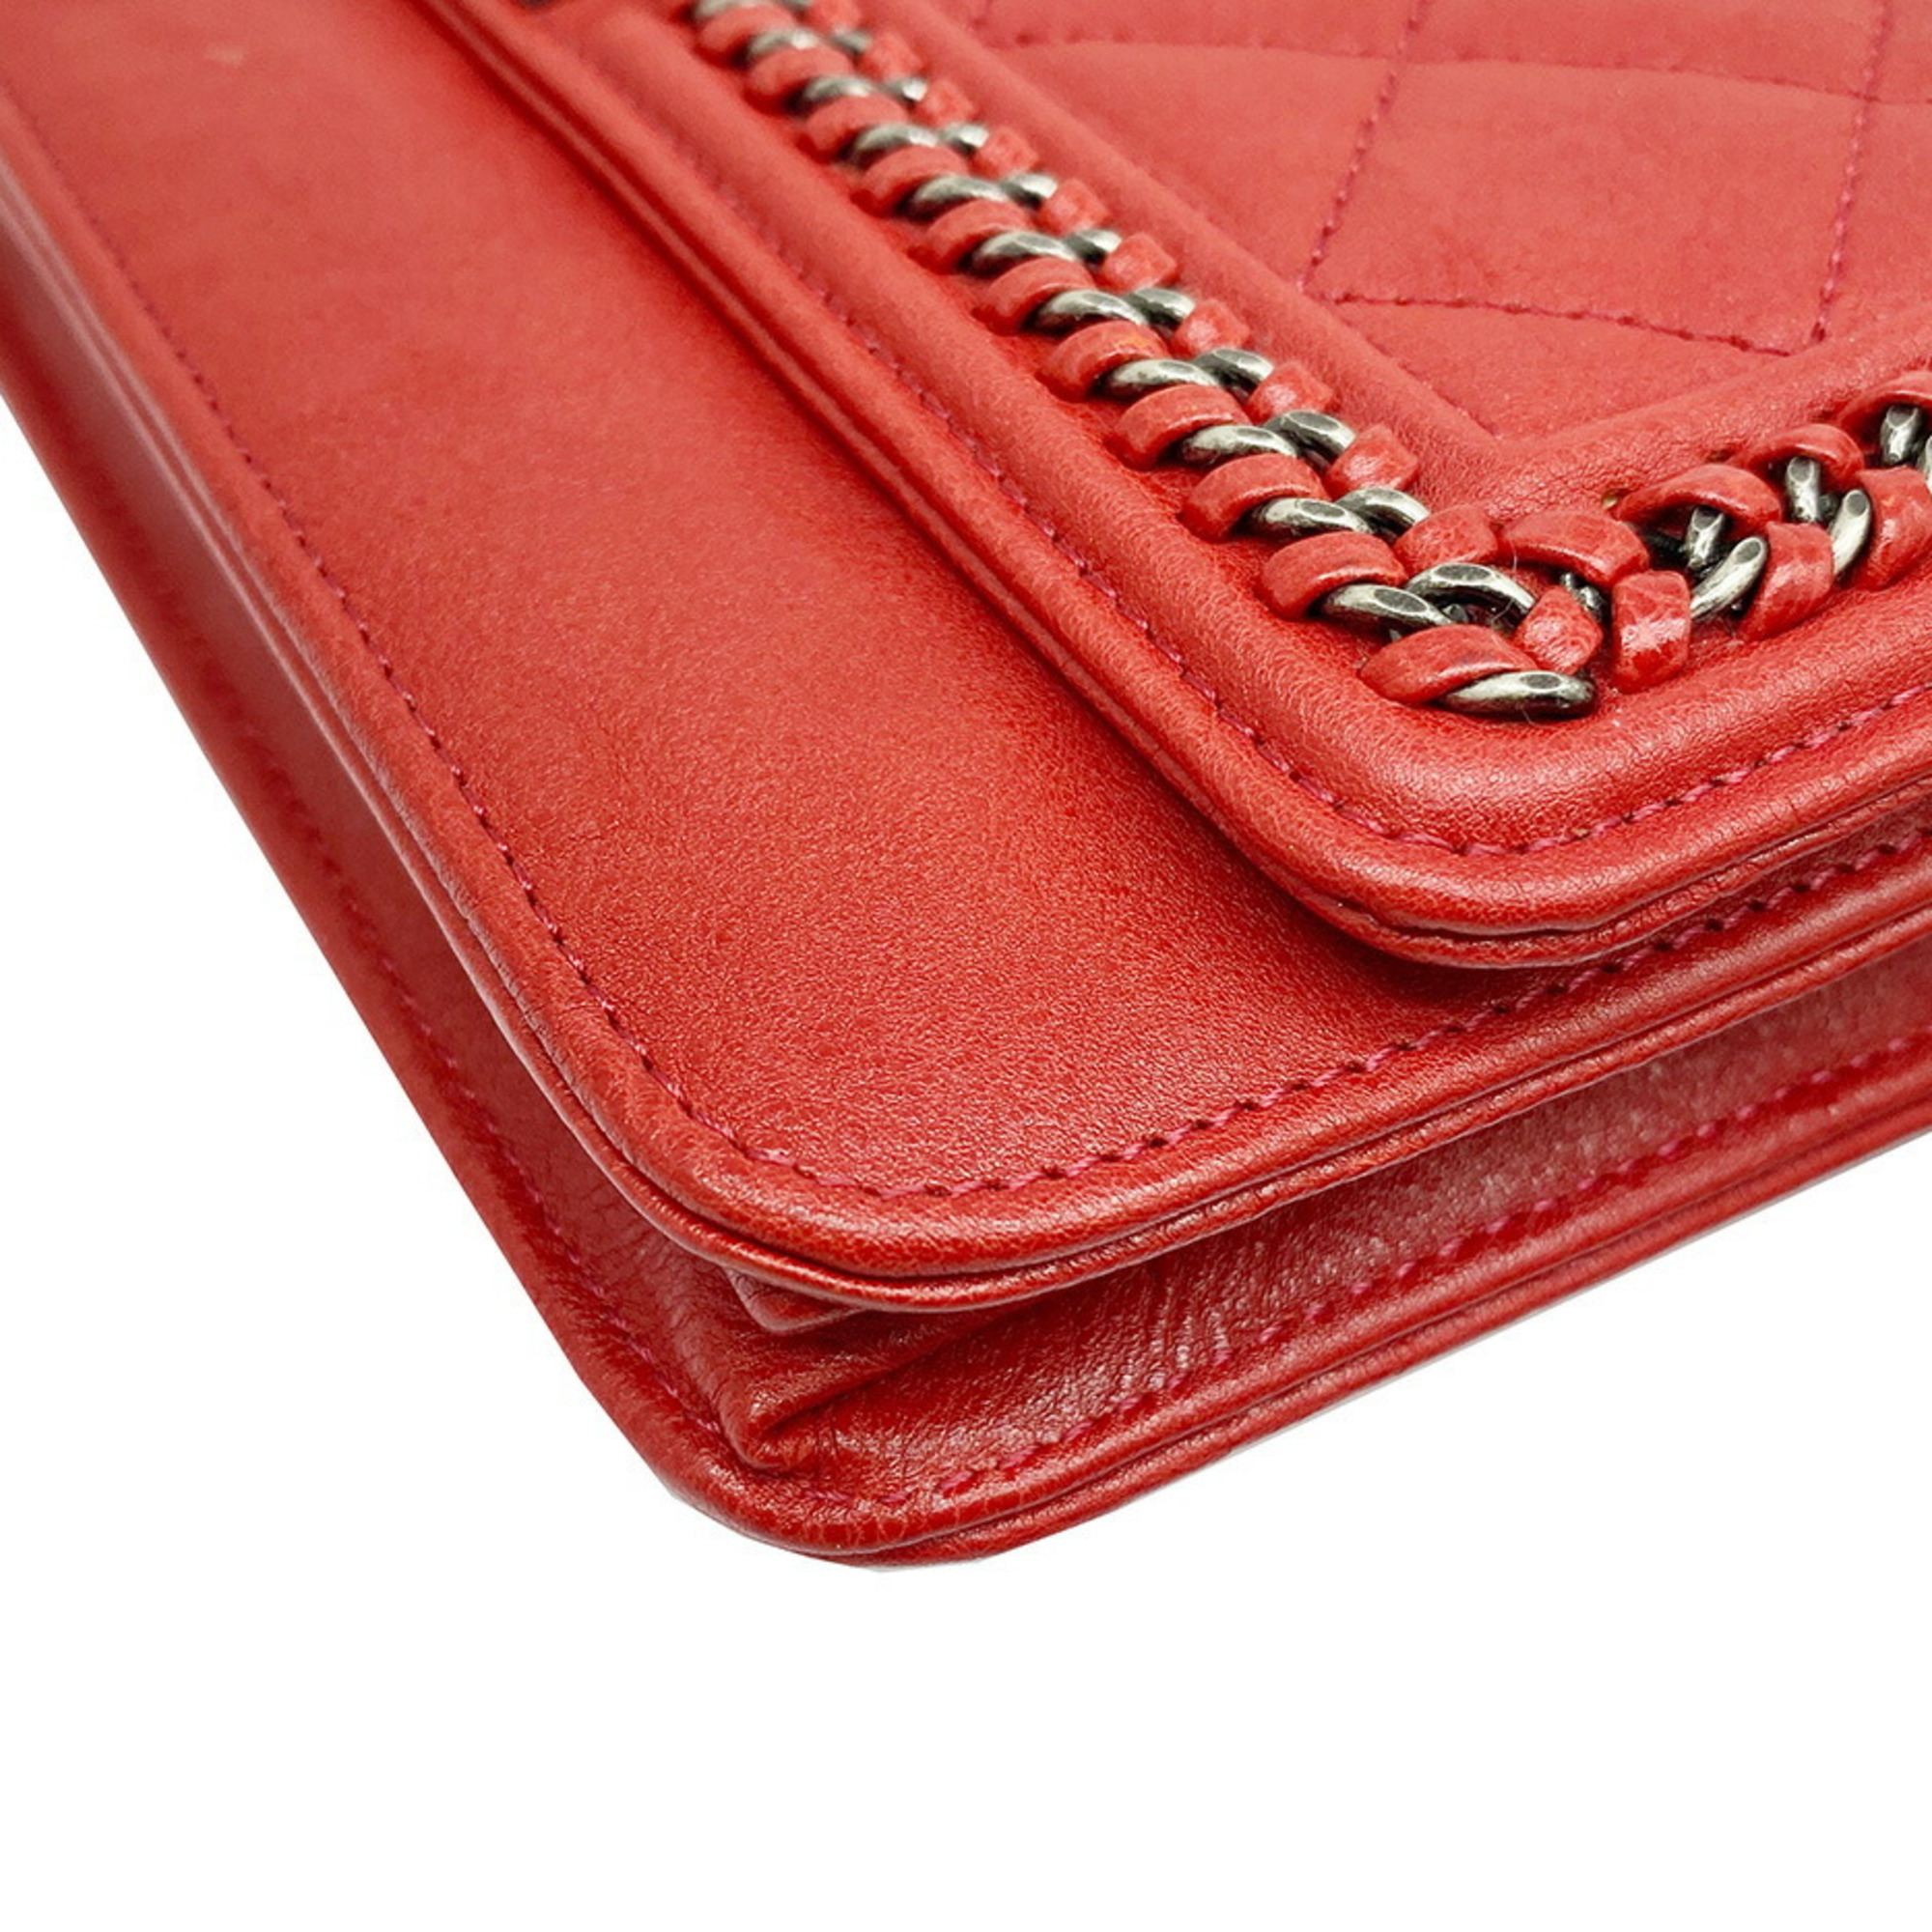 CHANEL Boy Chanel Chain Wallet Shoulder Bag Red S Hardware Lambskin Ladies